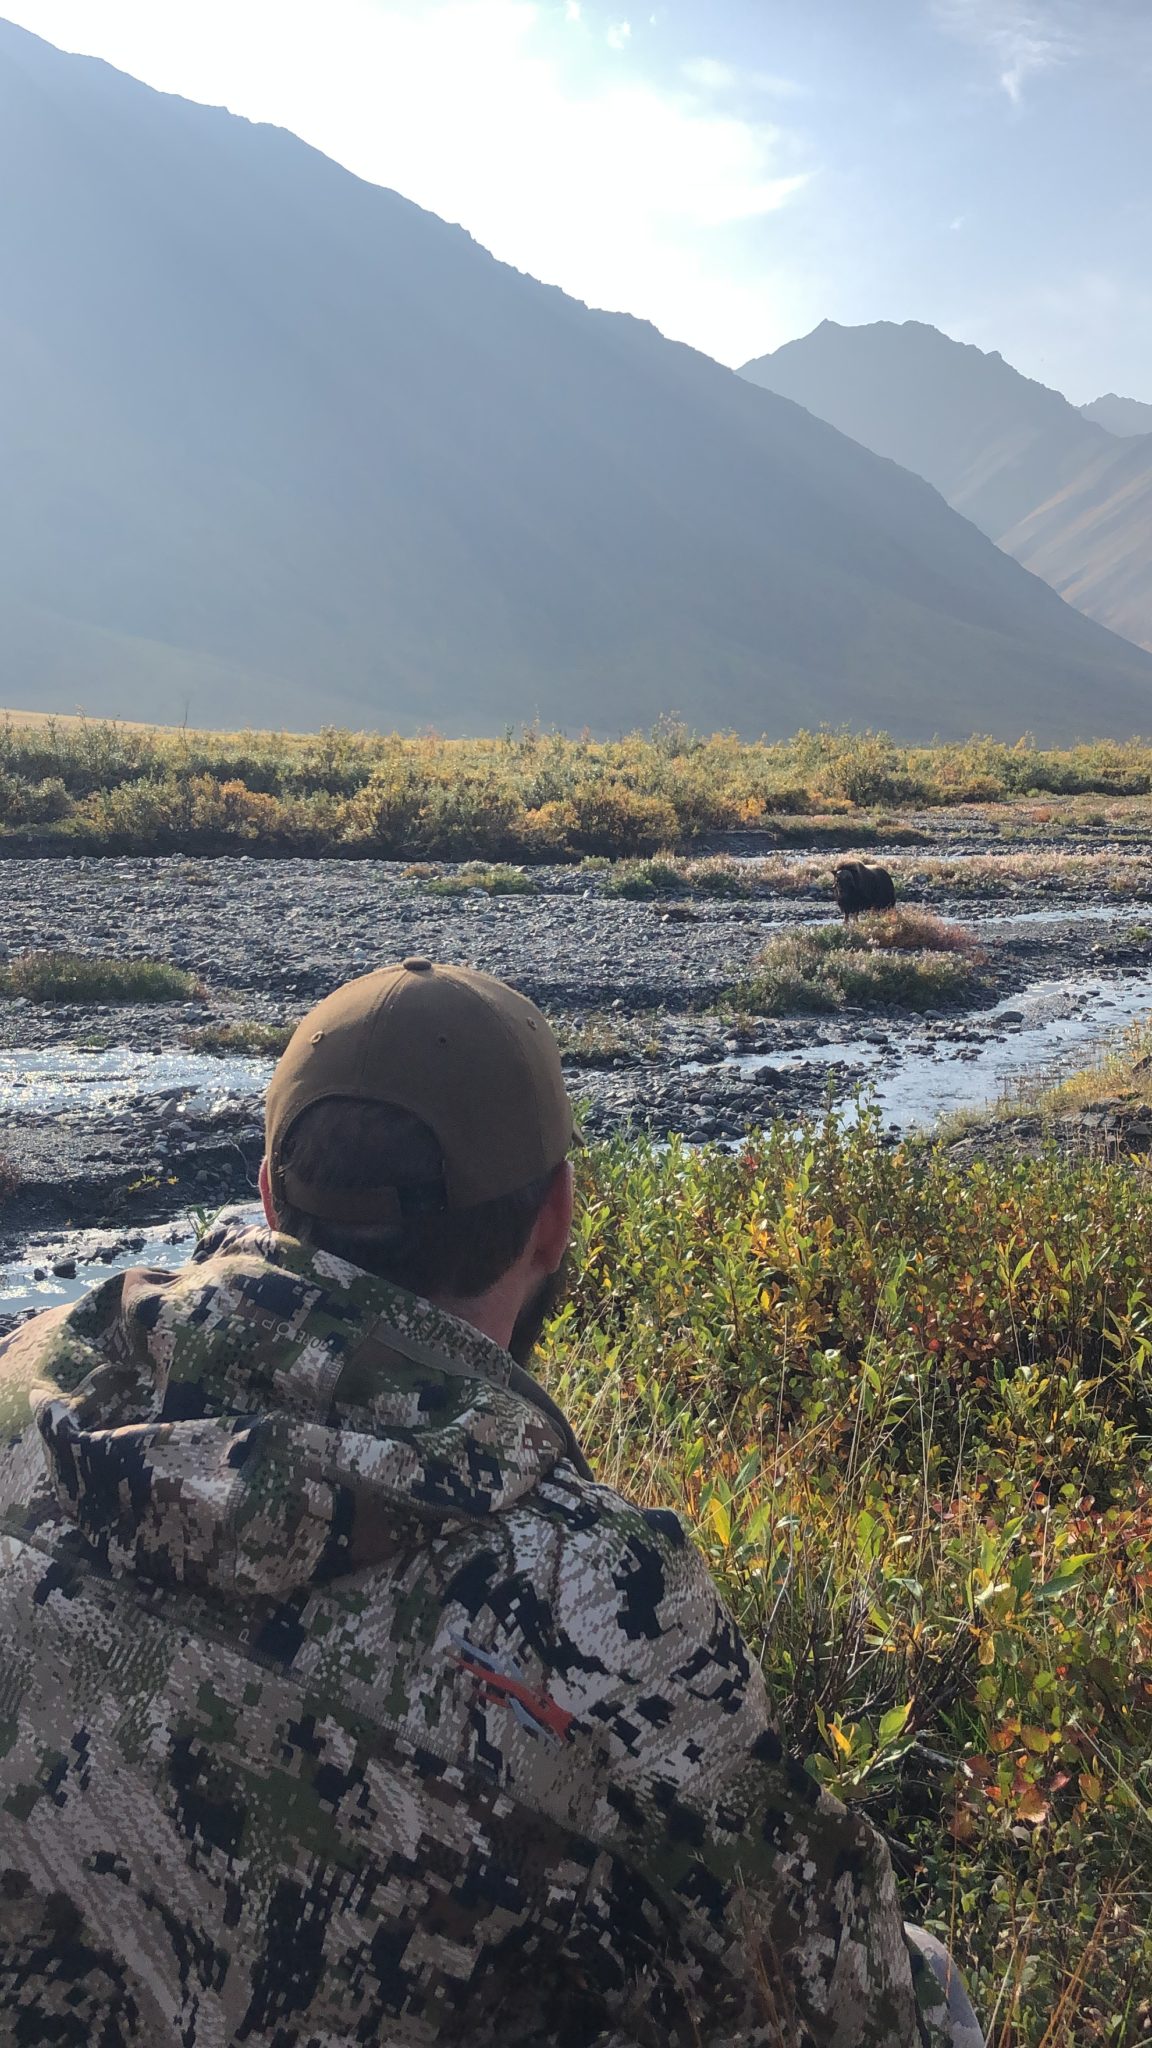 Alaska Draw Hunt Application Period Now Available Through Dec. 15